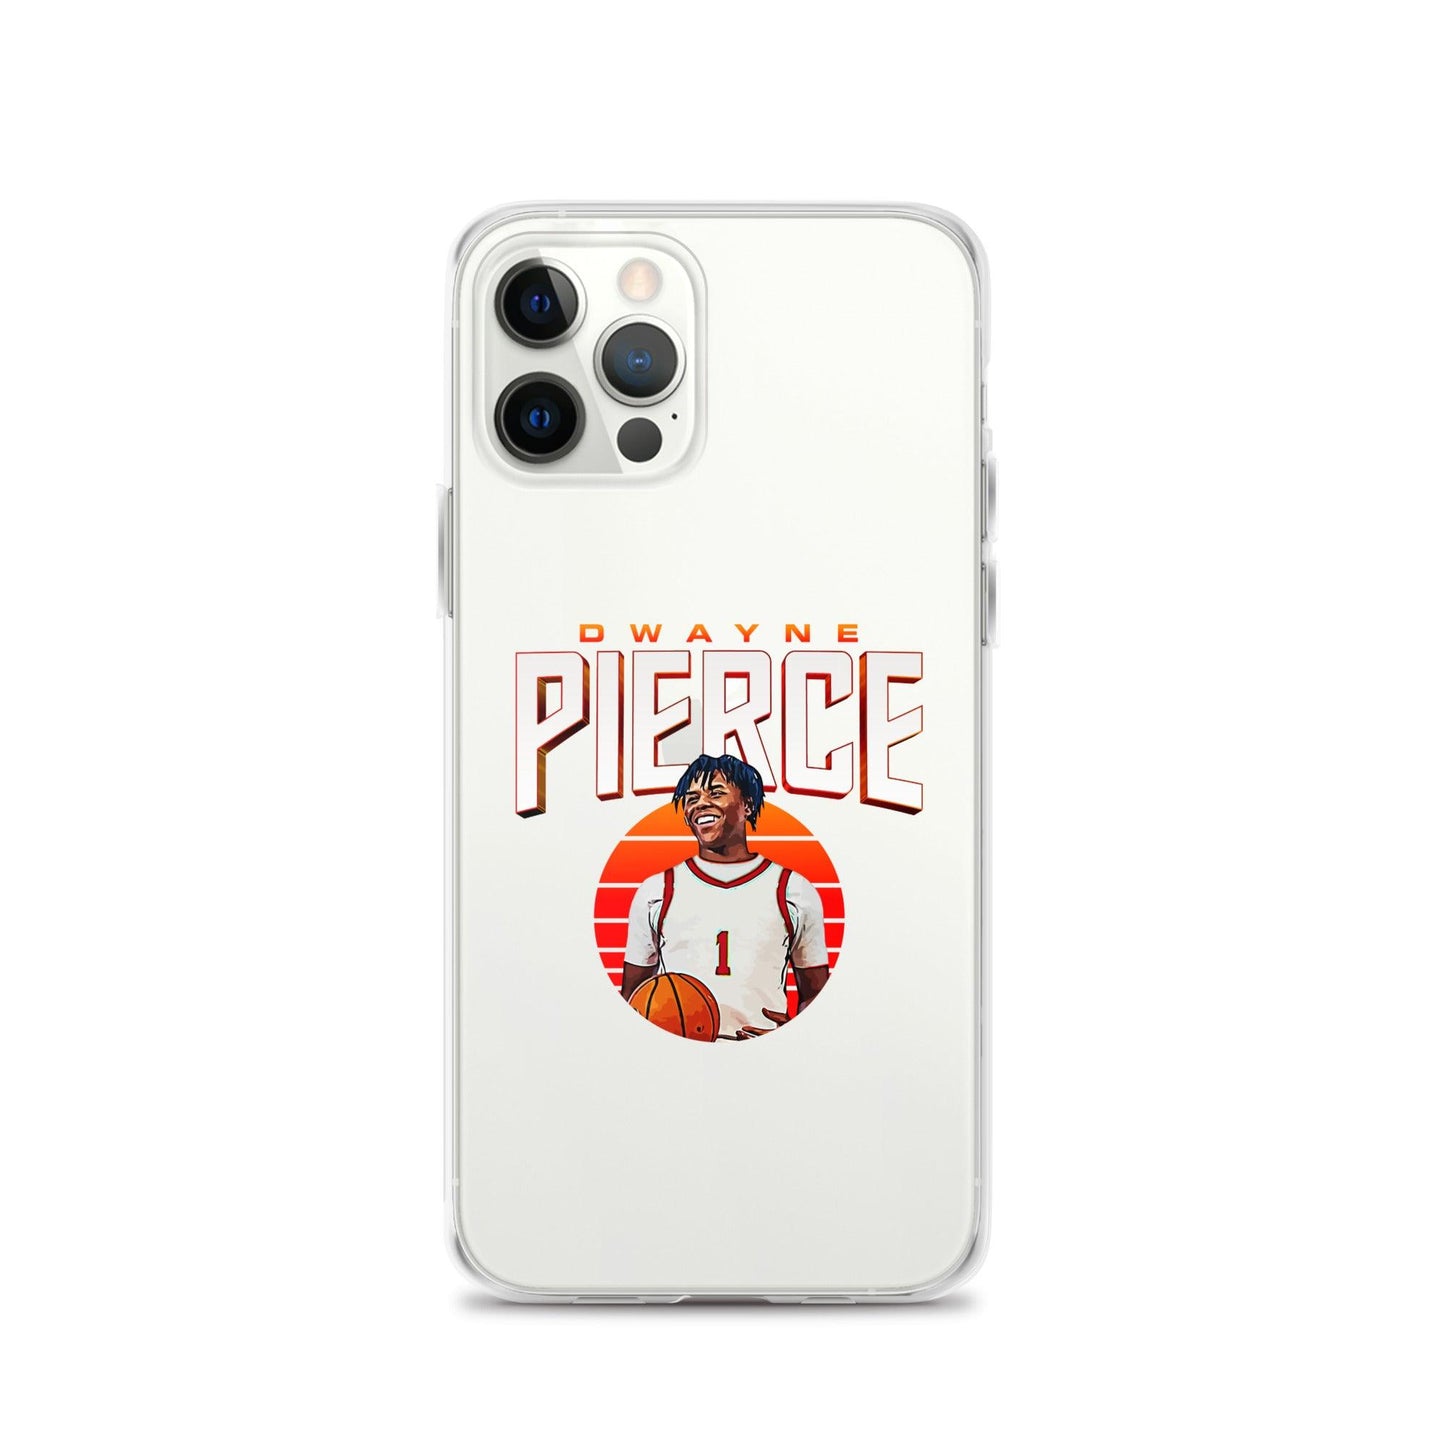 Dwayne Pierce "Gameday" iPhone® - Fan Arch